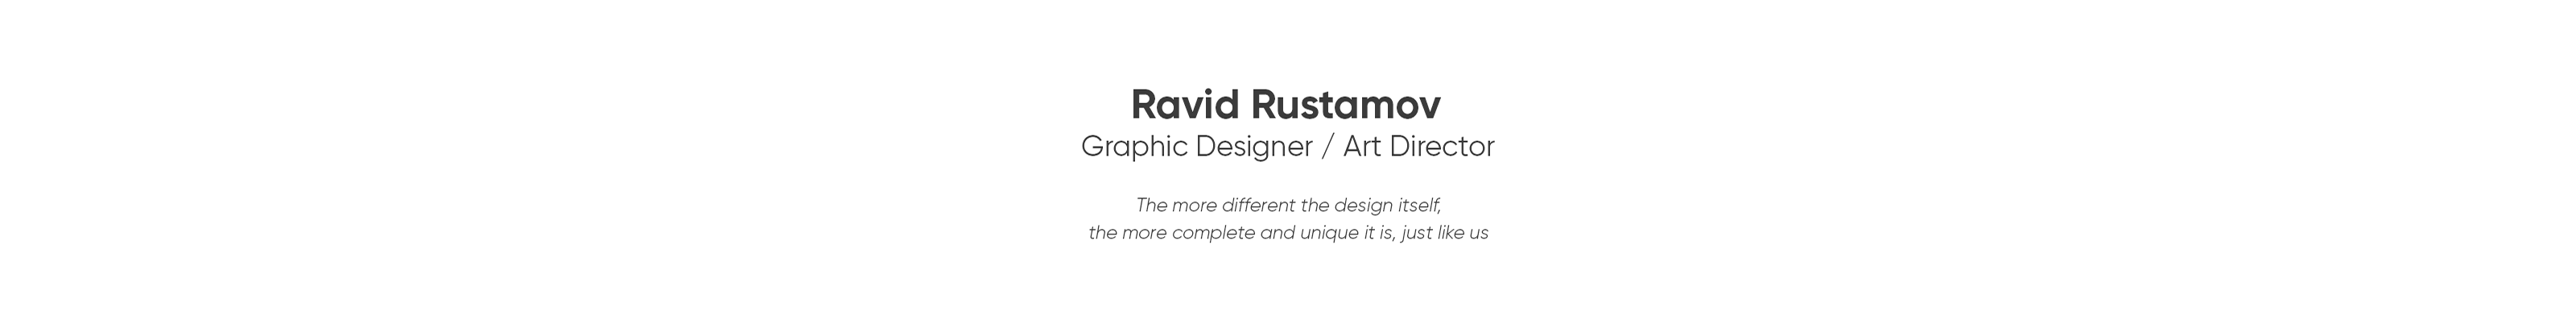 Profielbanner van Ravid Rustamov